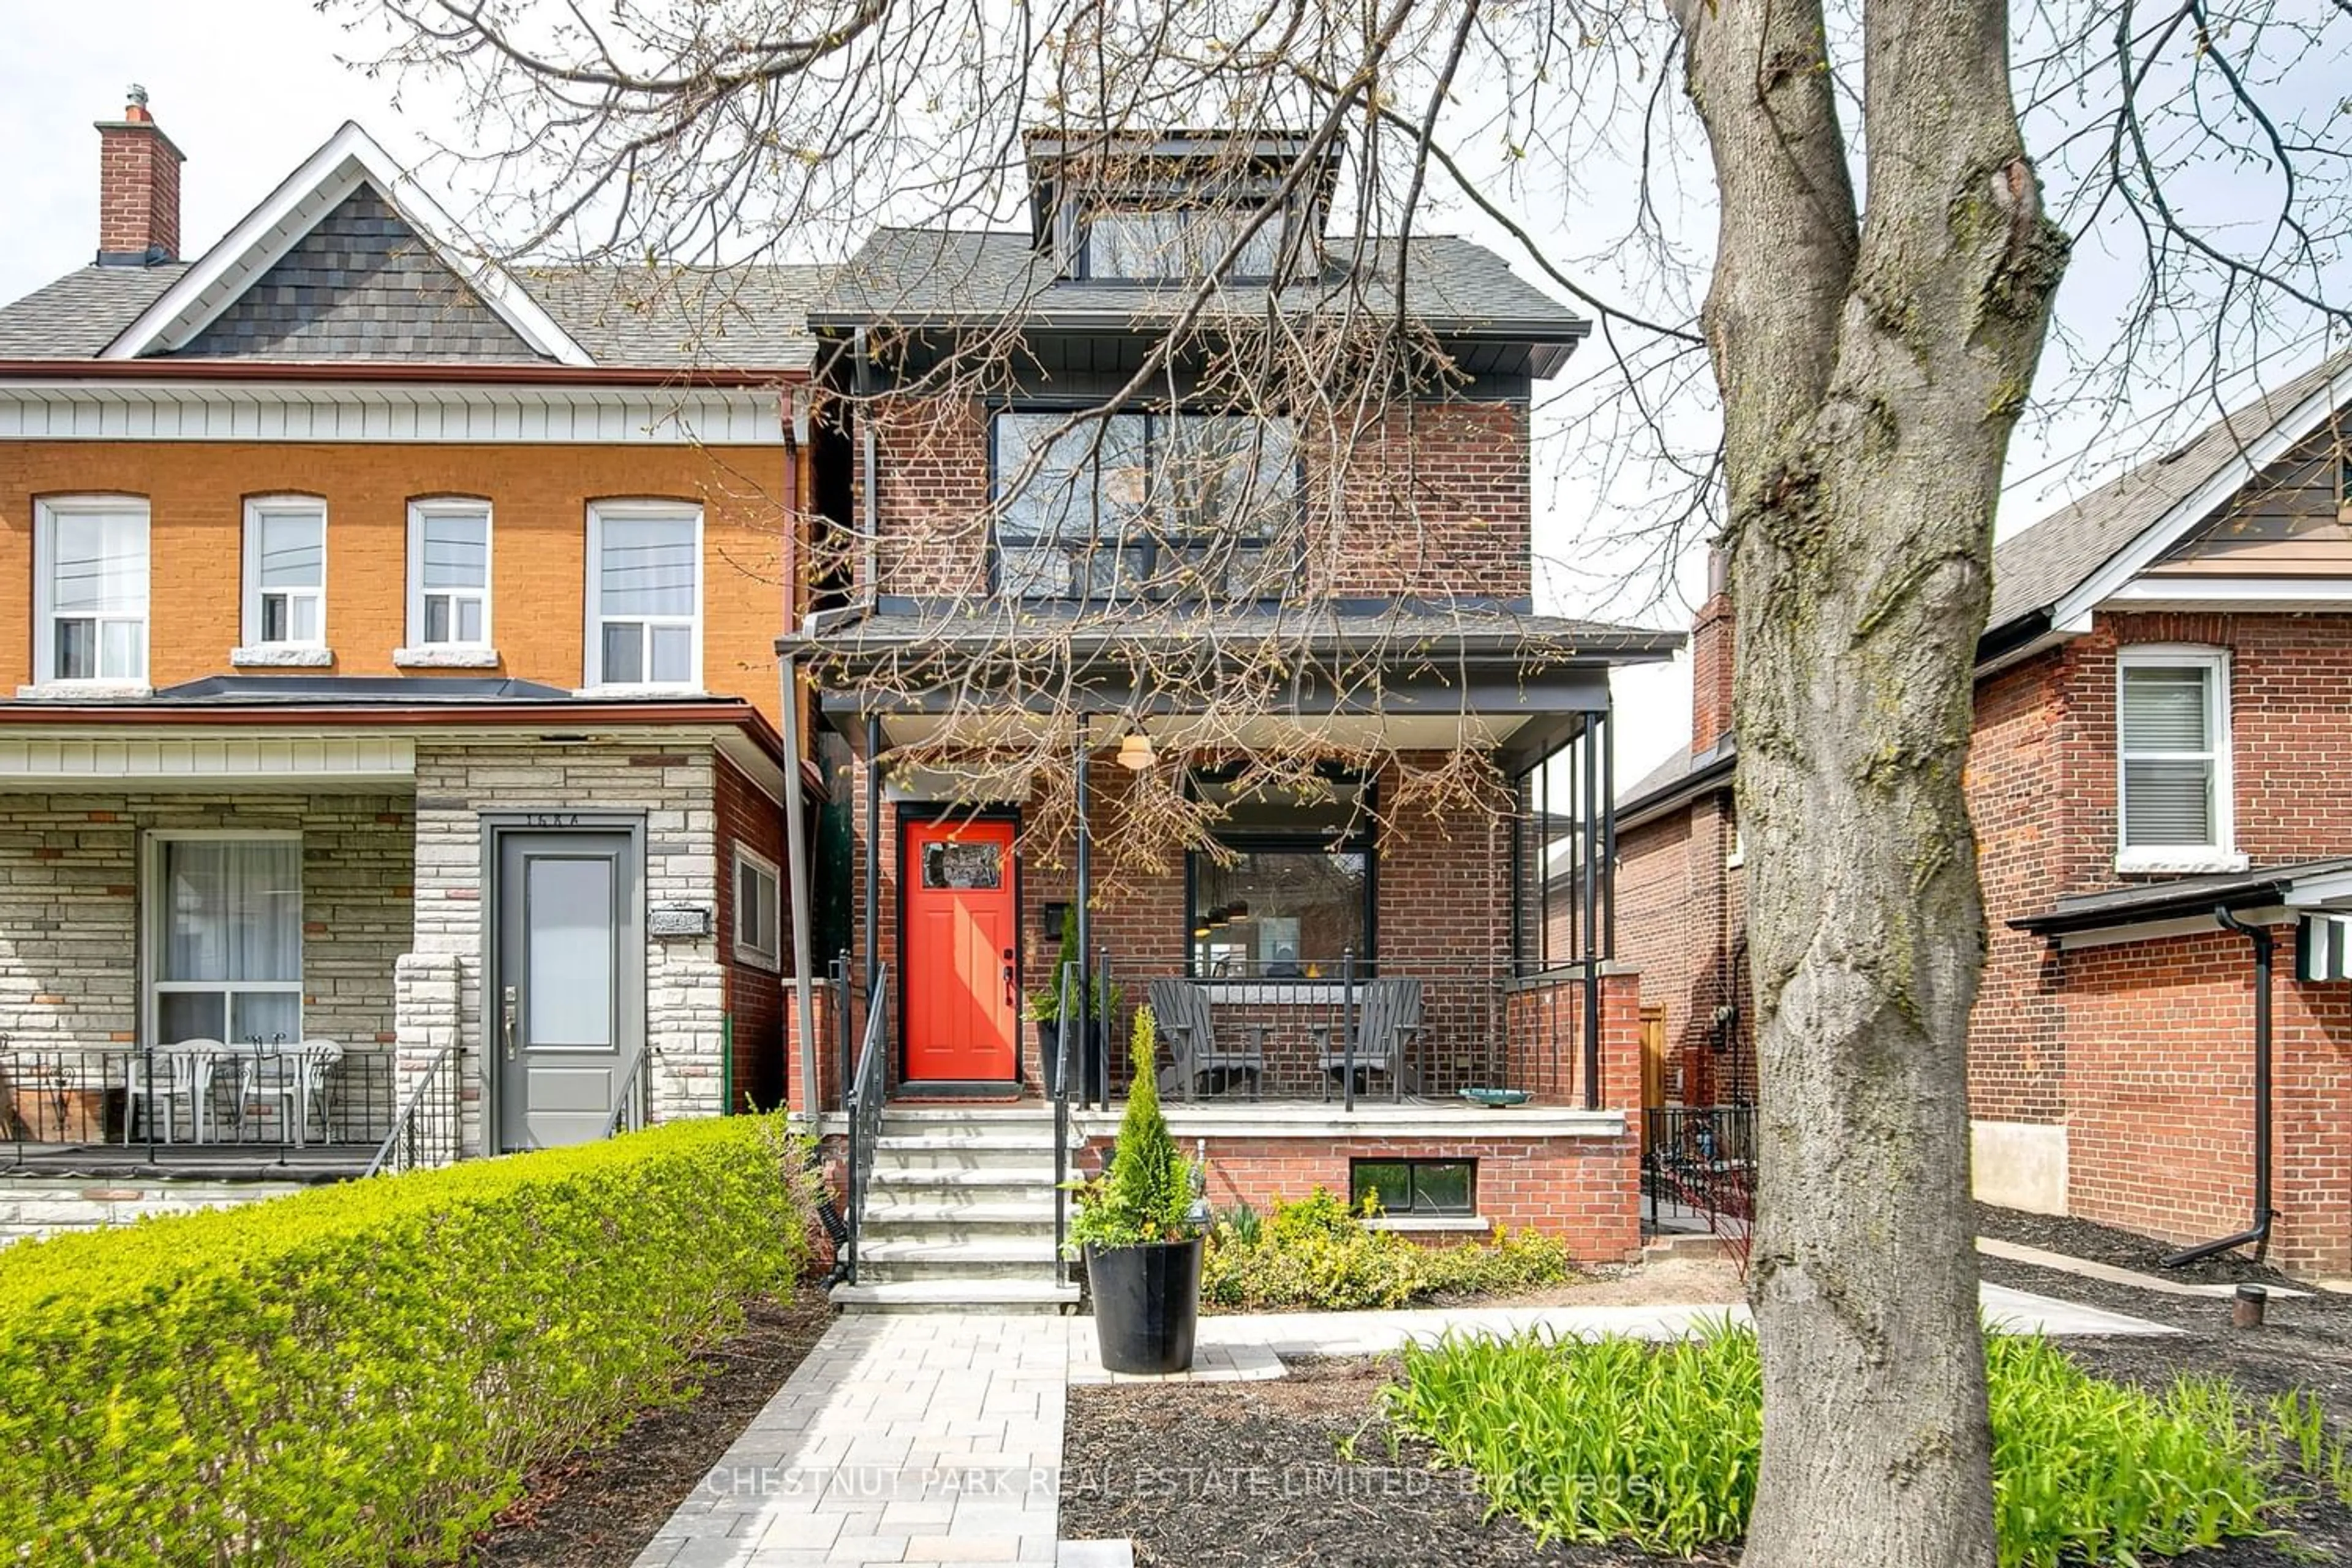 Home with brick exterior material for 170 Campbell Ave, Toronto Ontario M6P 3V4